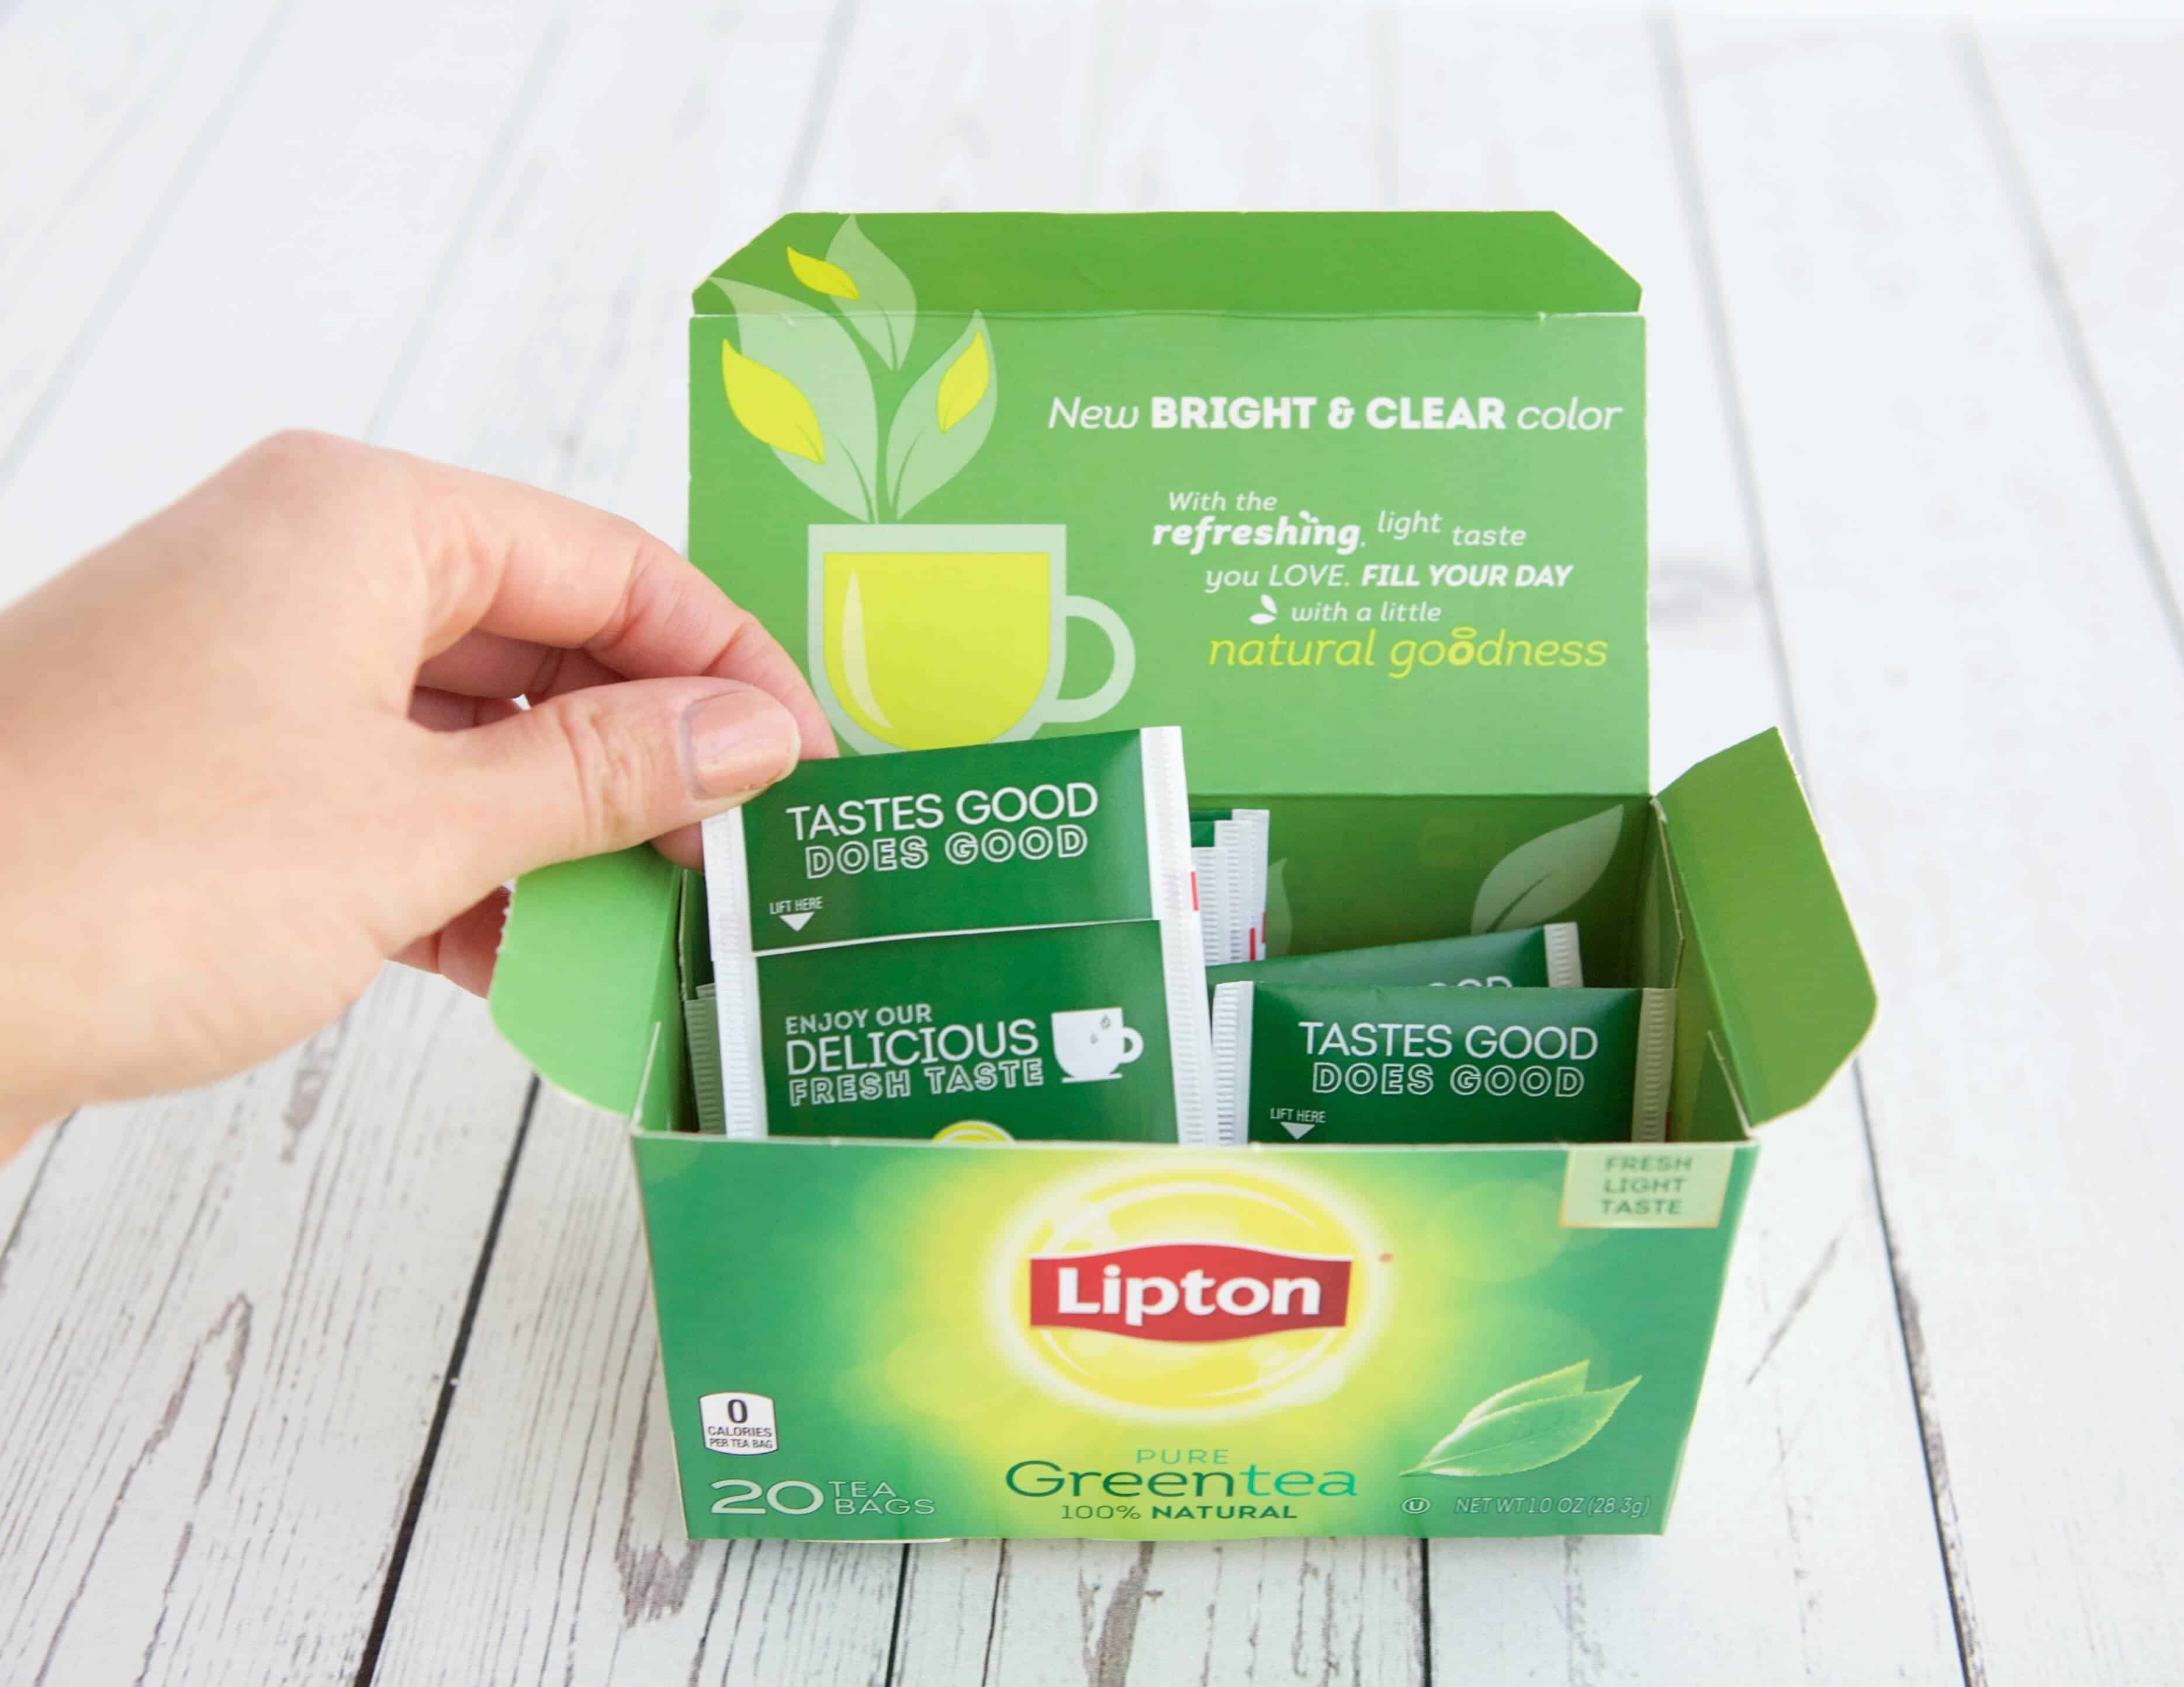 Lipton Green Tea bags